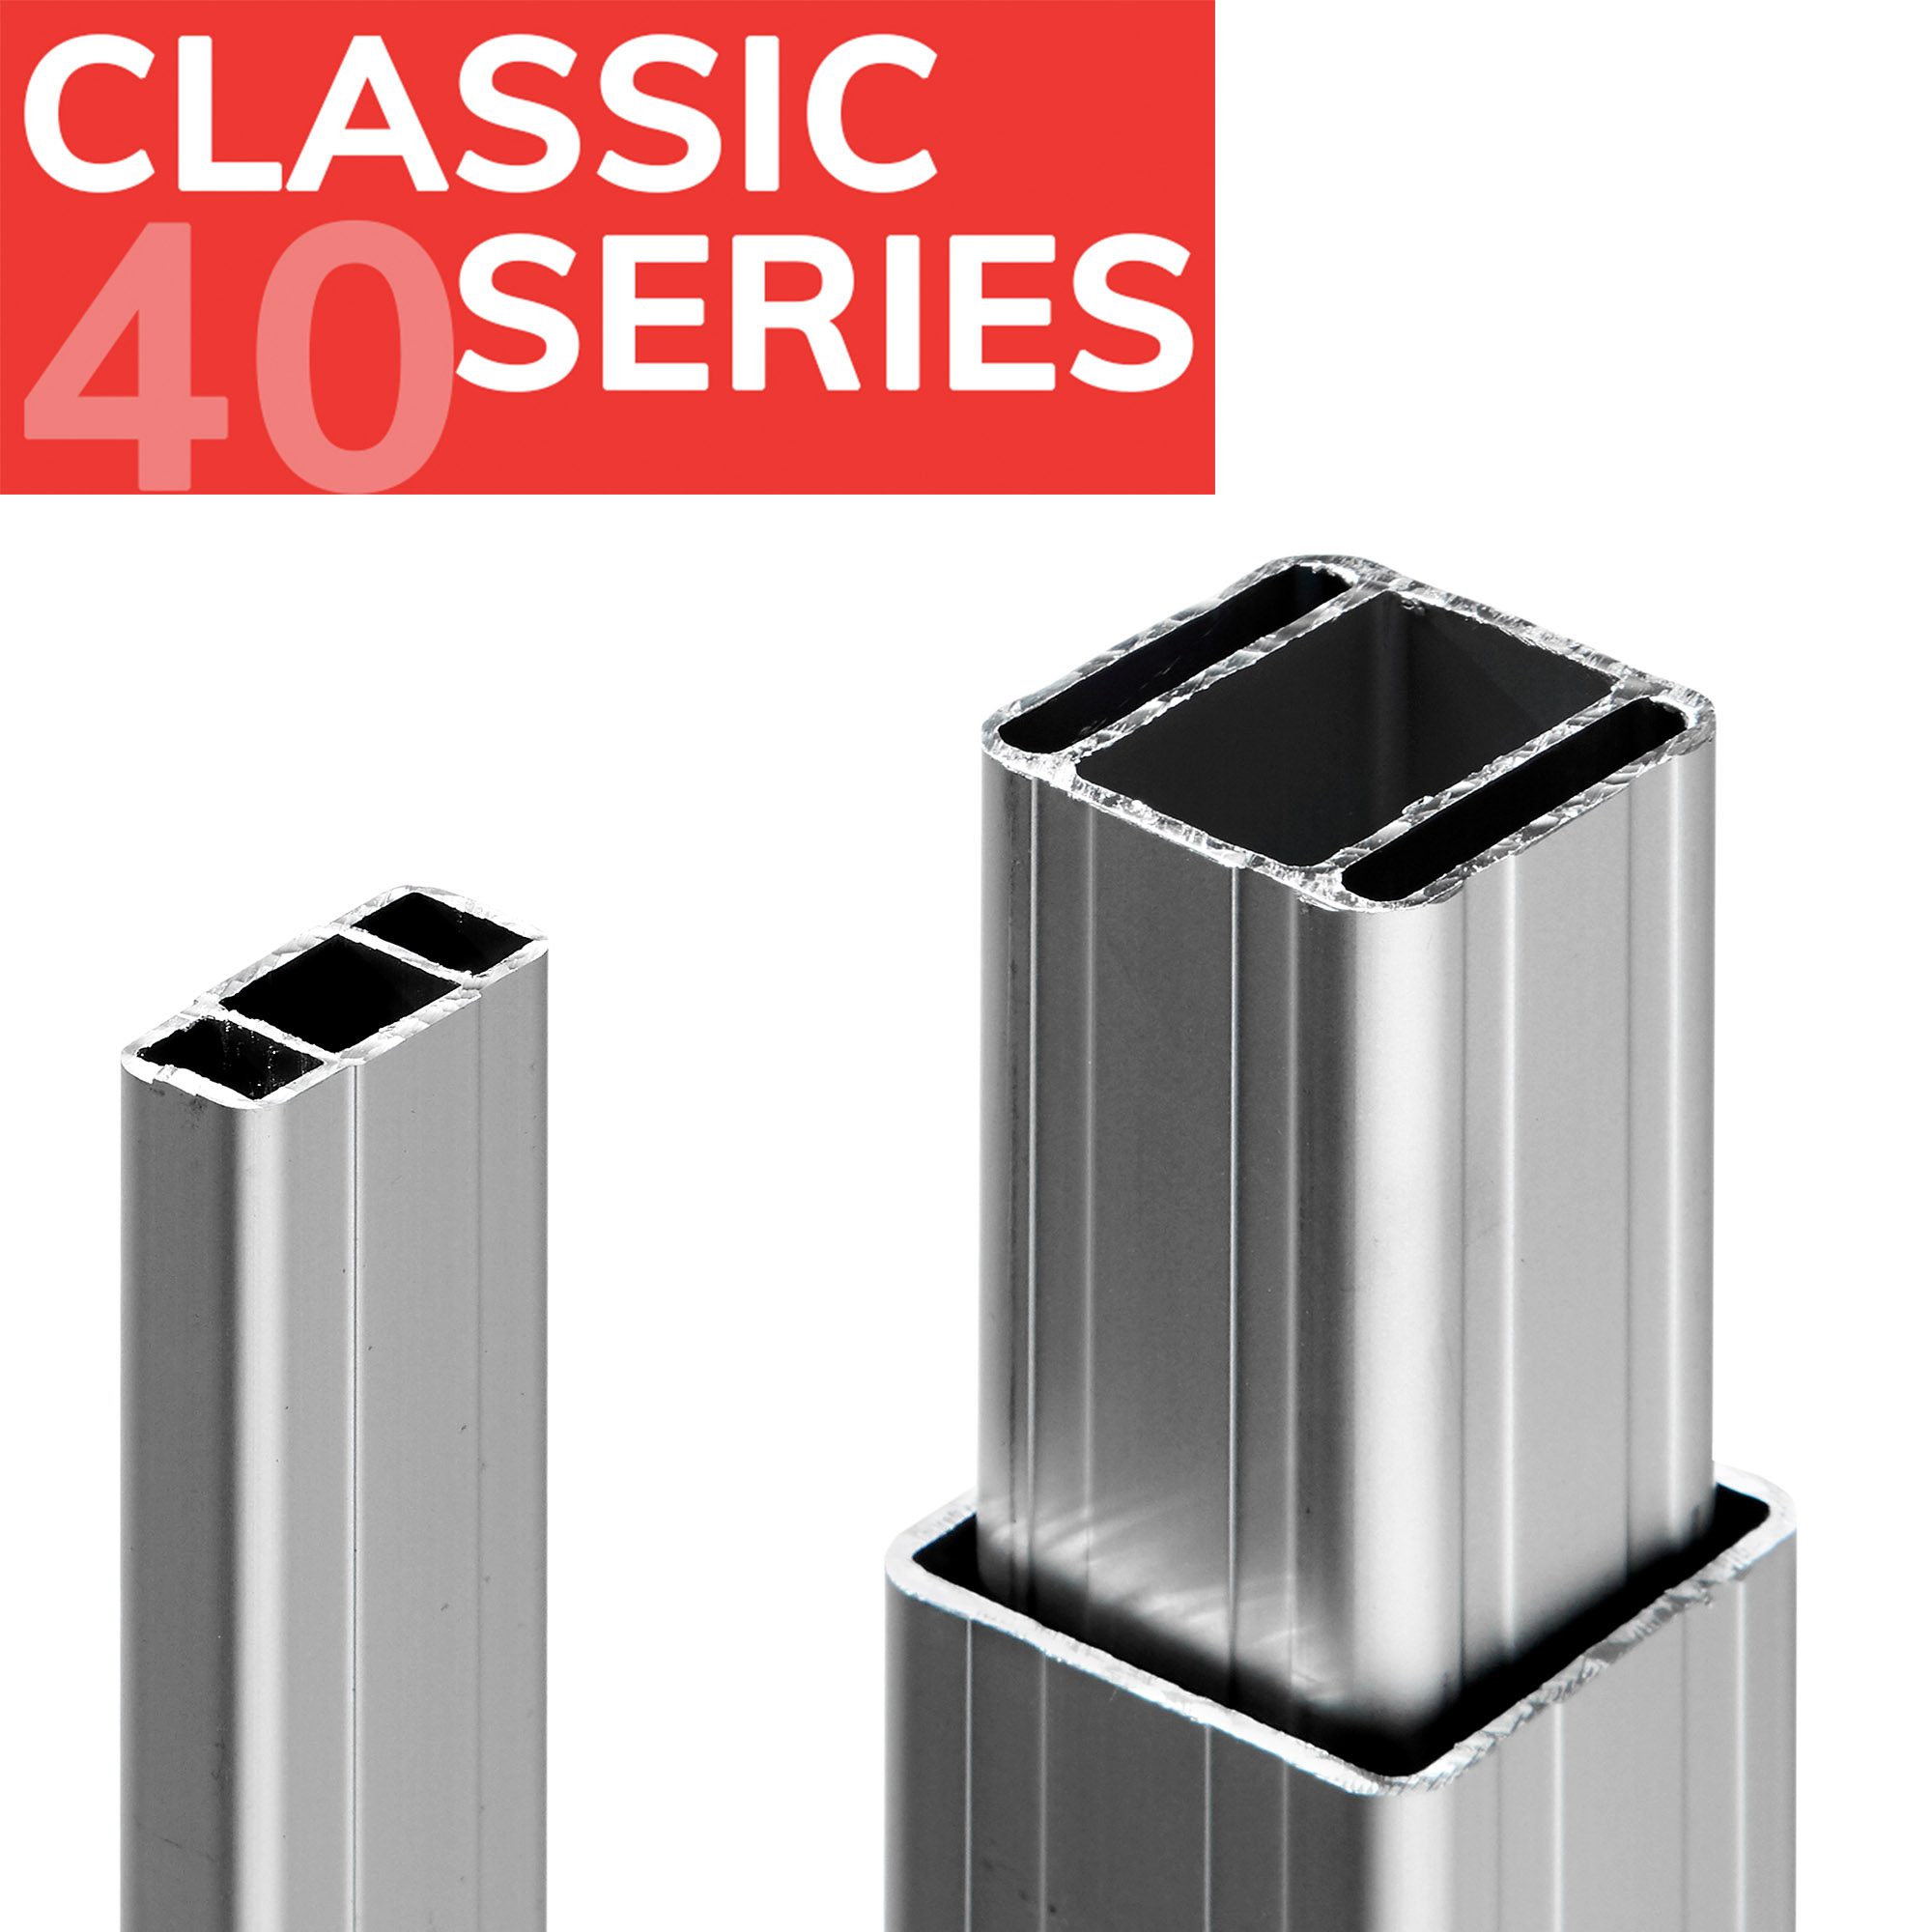 Classic 40 Series